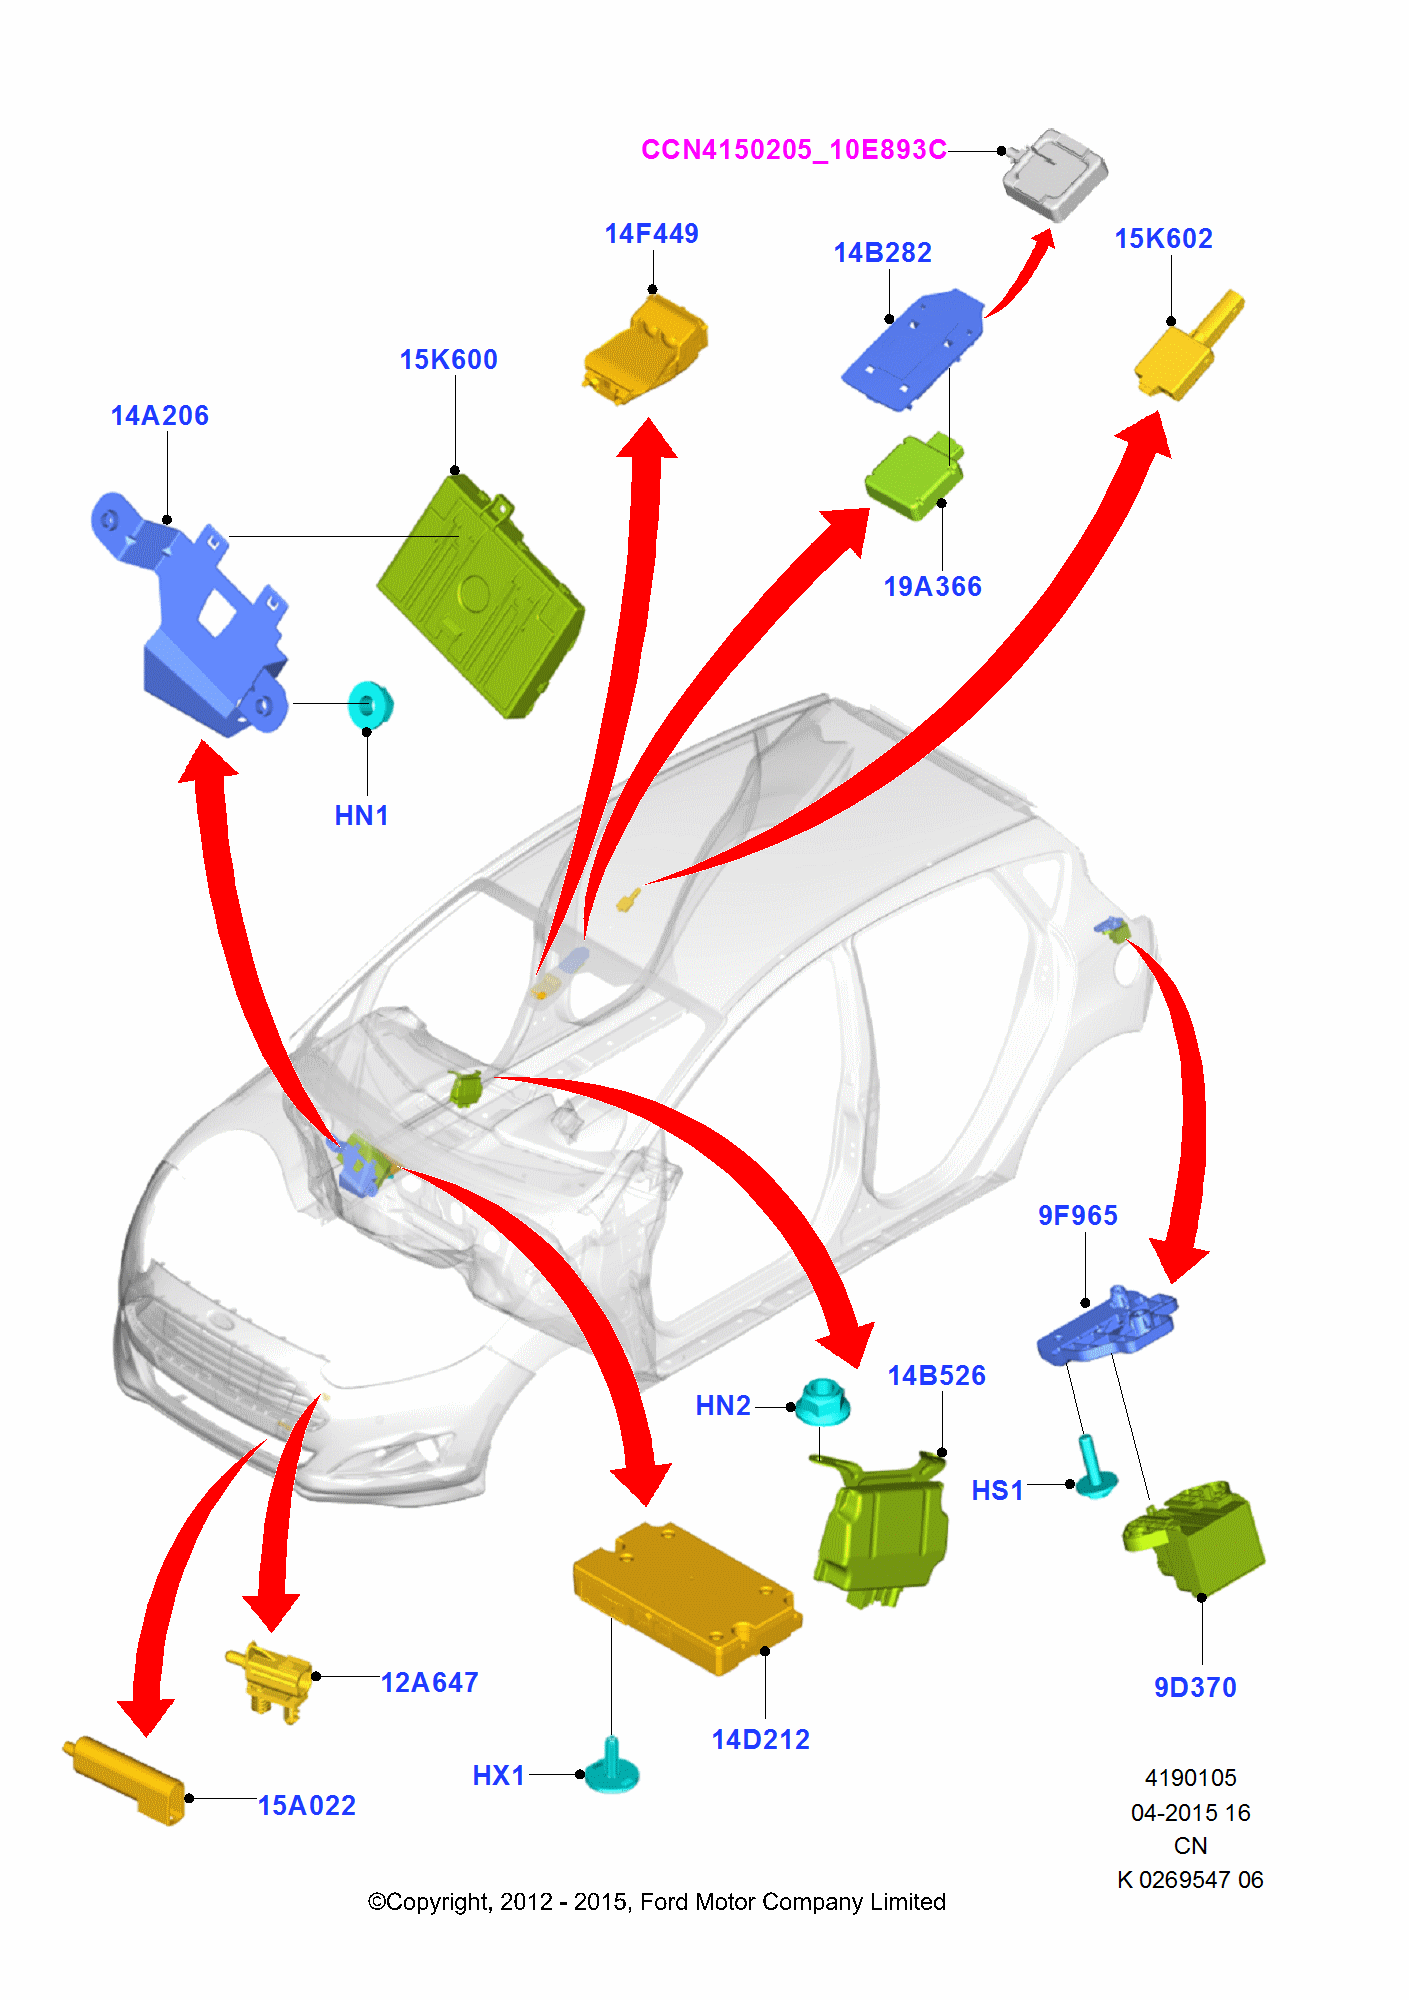 Vehicle Modules And Sensors por Ford Fiesta Fiesta 2012-                  (CCN)